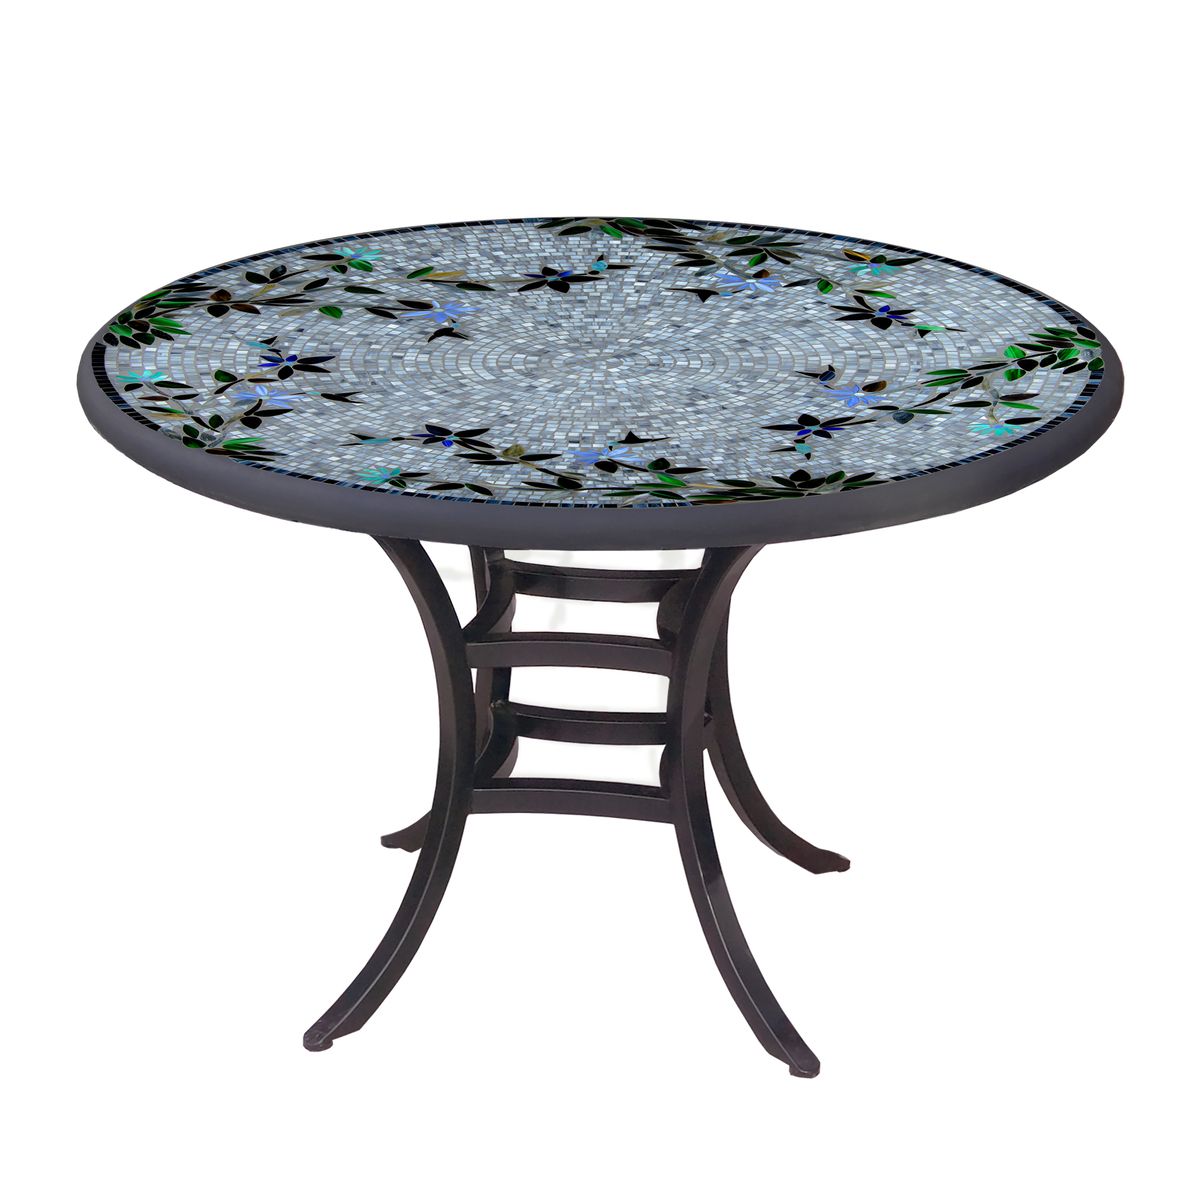 Royal Hummingbird Mosaic Patio Table-Iron Accents